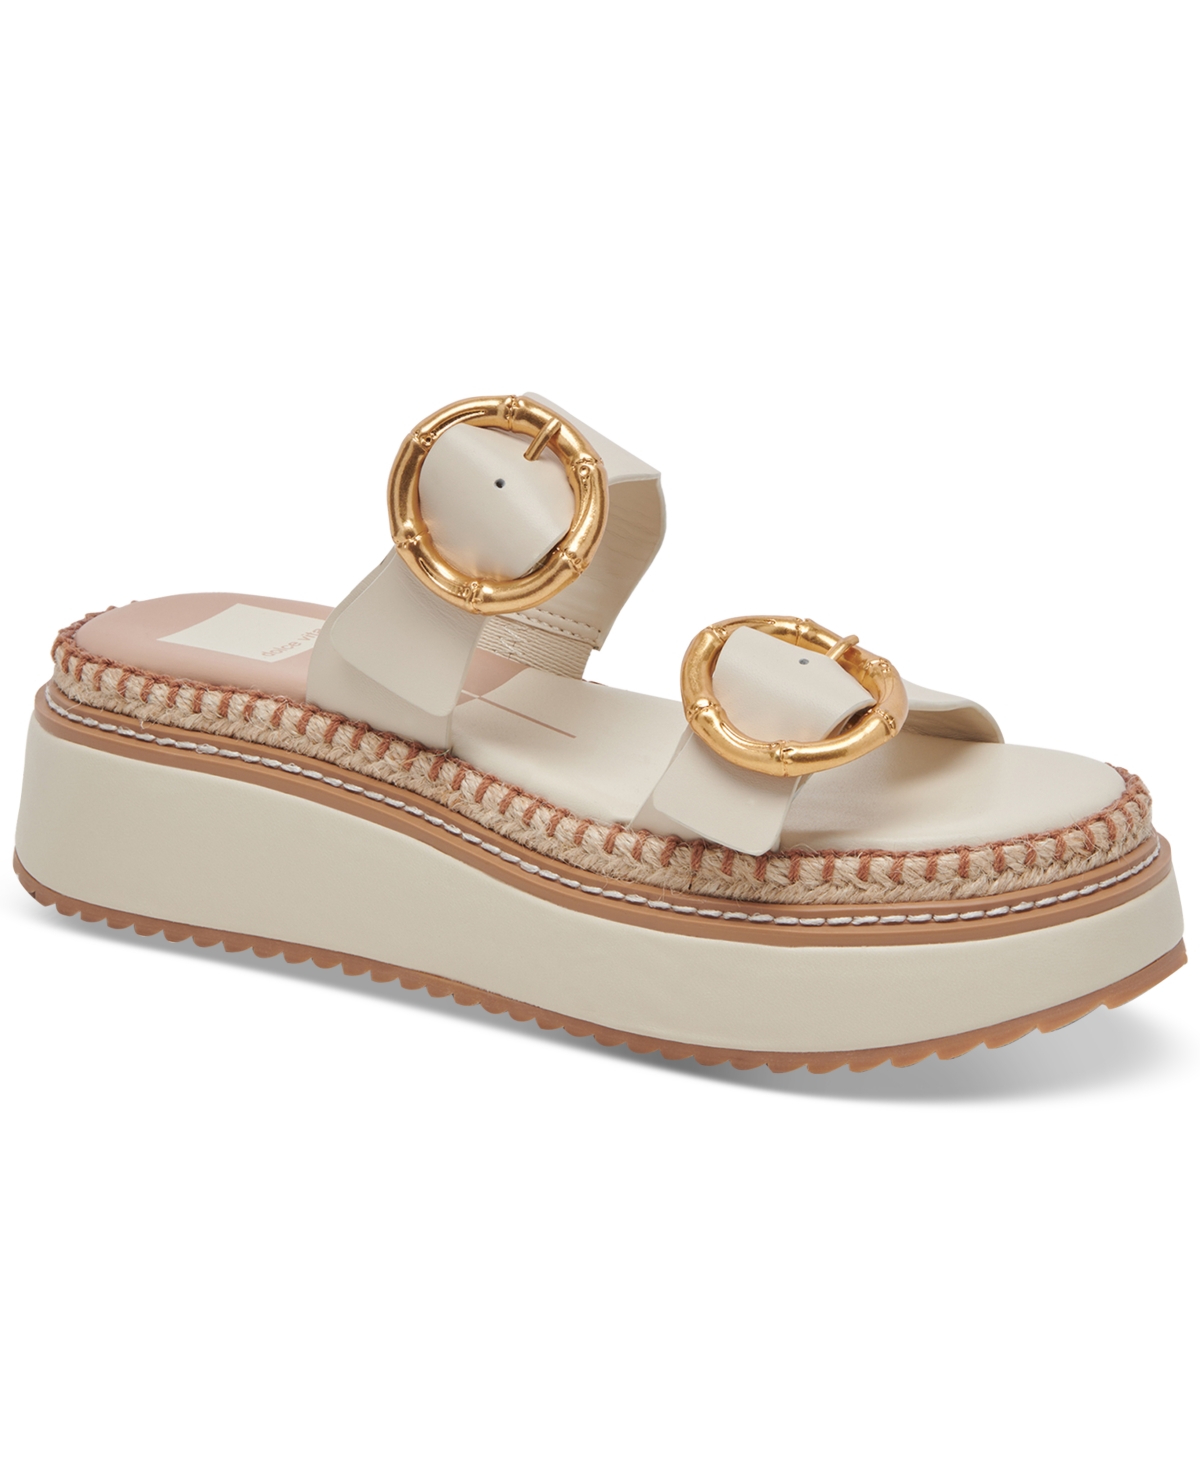 Women's Rysha Buckled Espadrille Platform Wedge Sandals - Light Gold Metallic